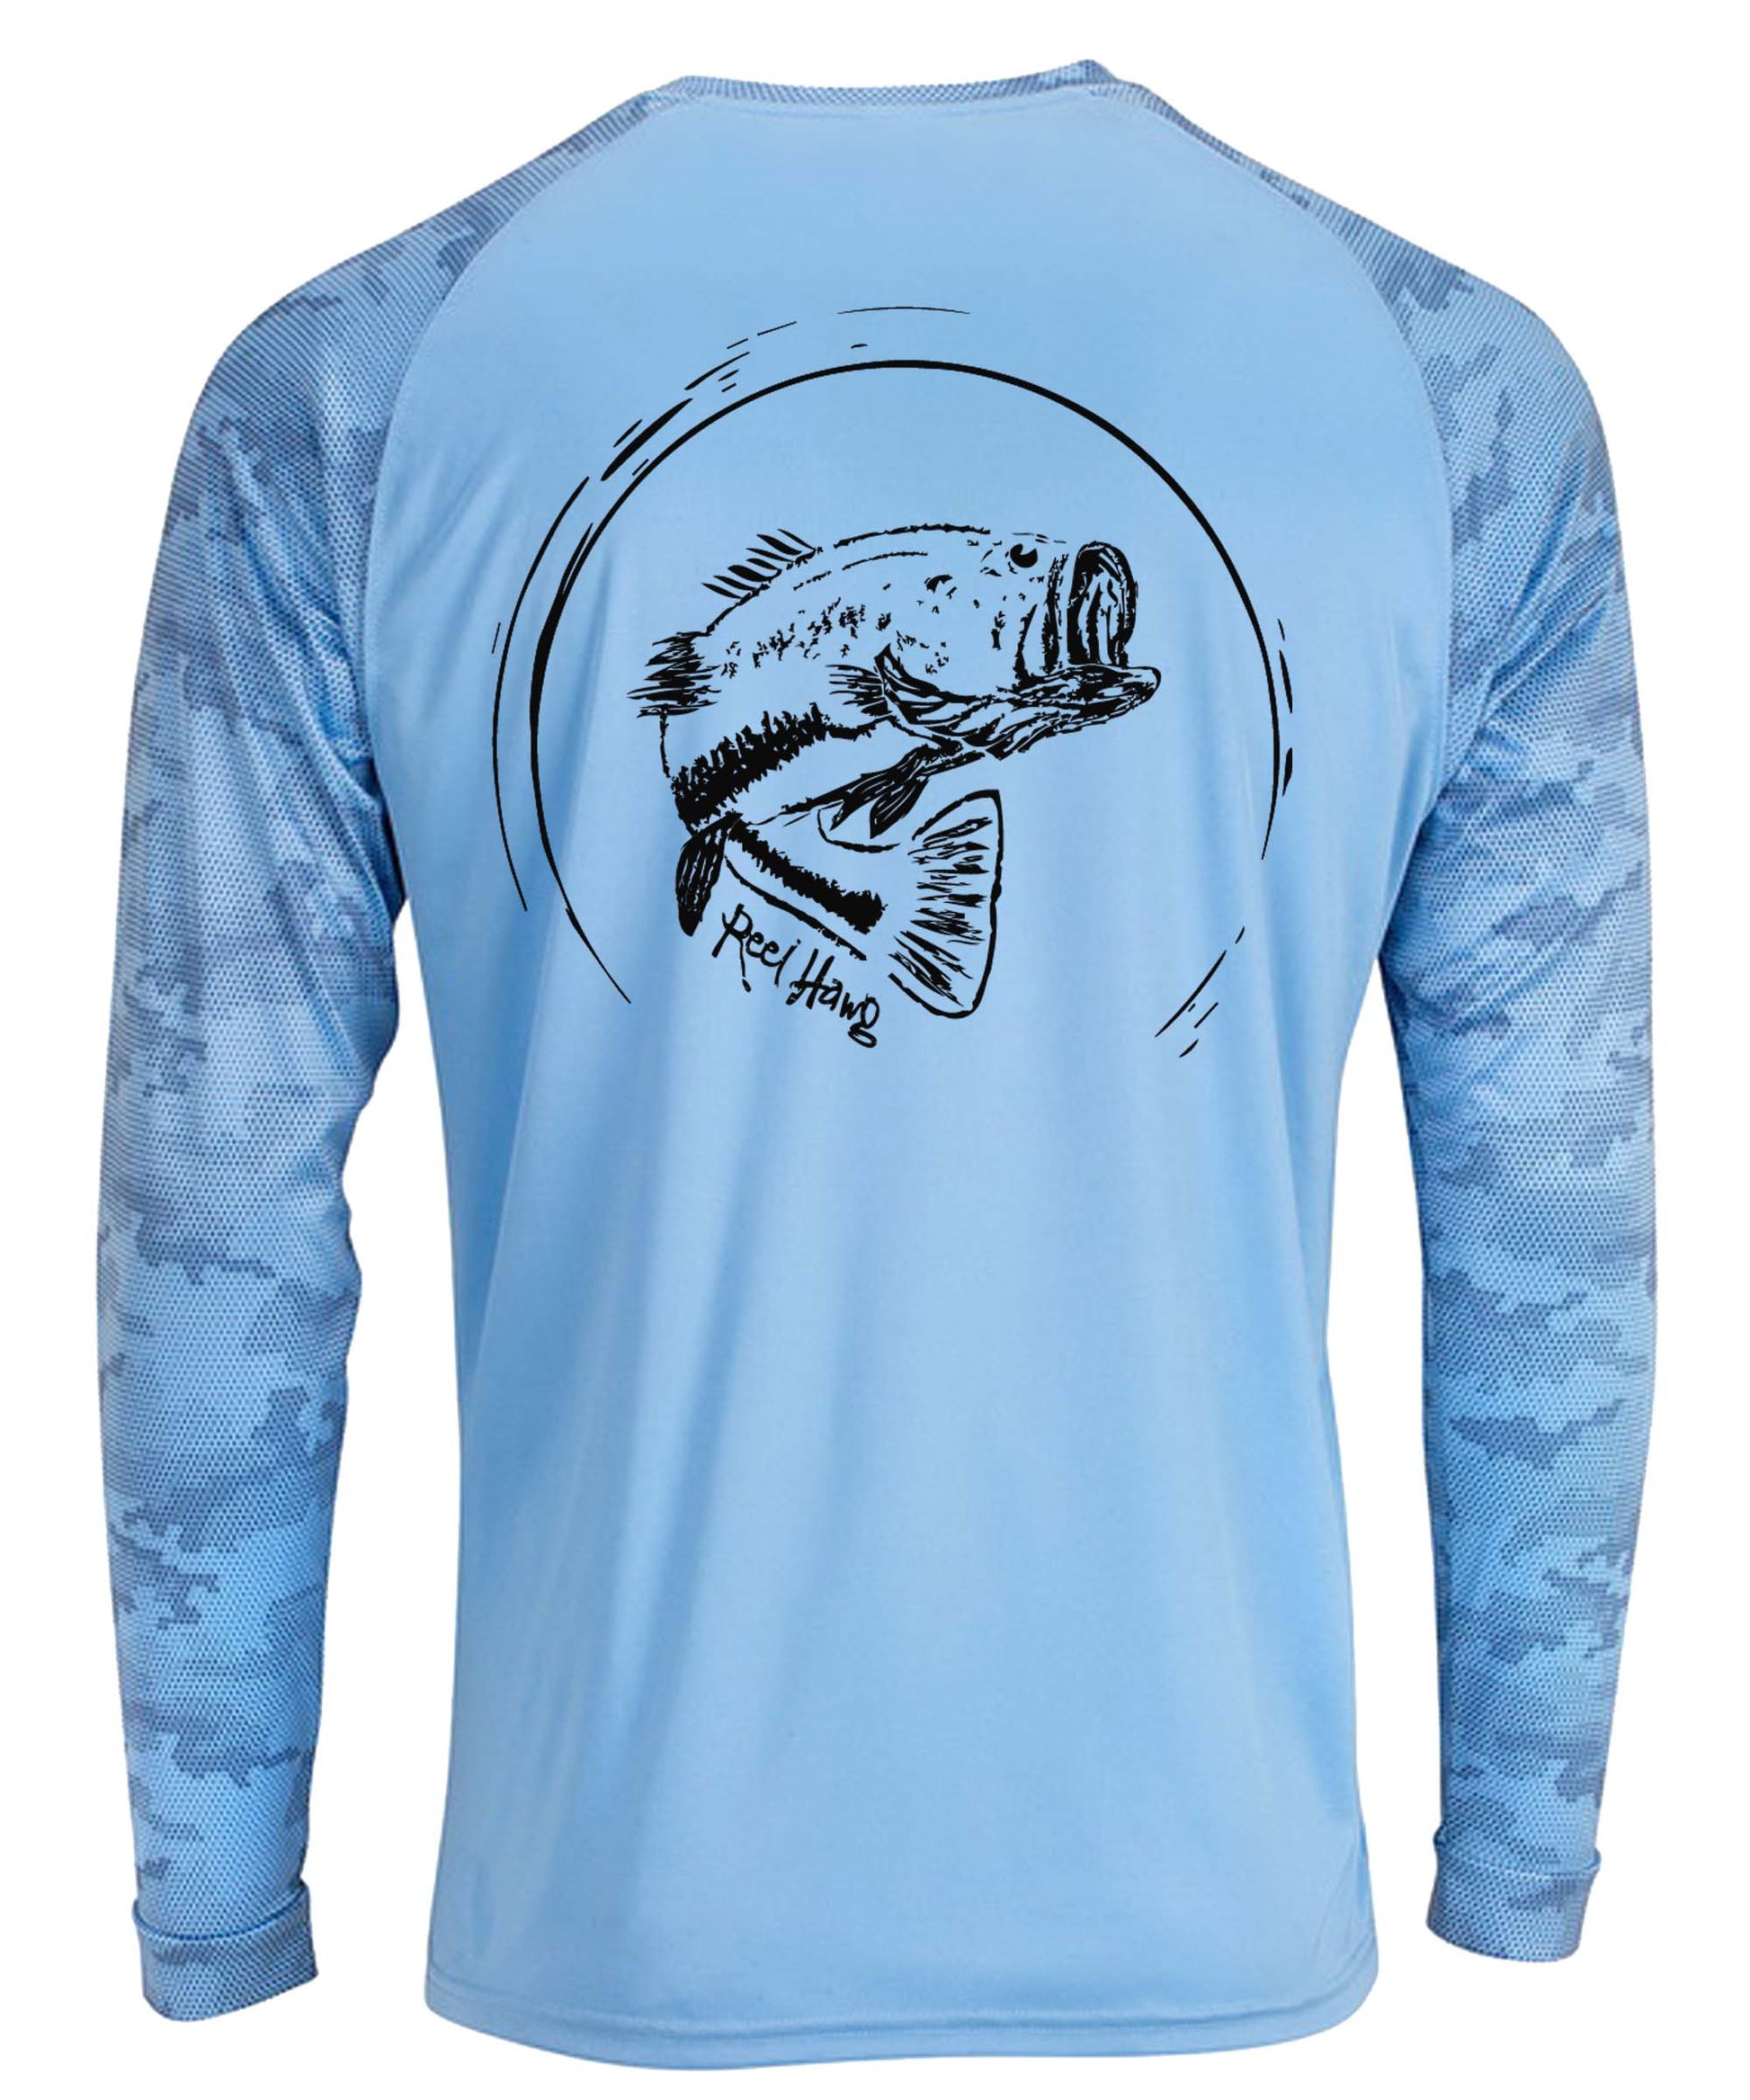 Performance Fishing Shirt Long Sleeve UPF 50+ (Native Fly)